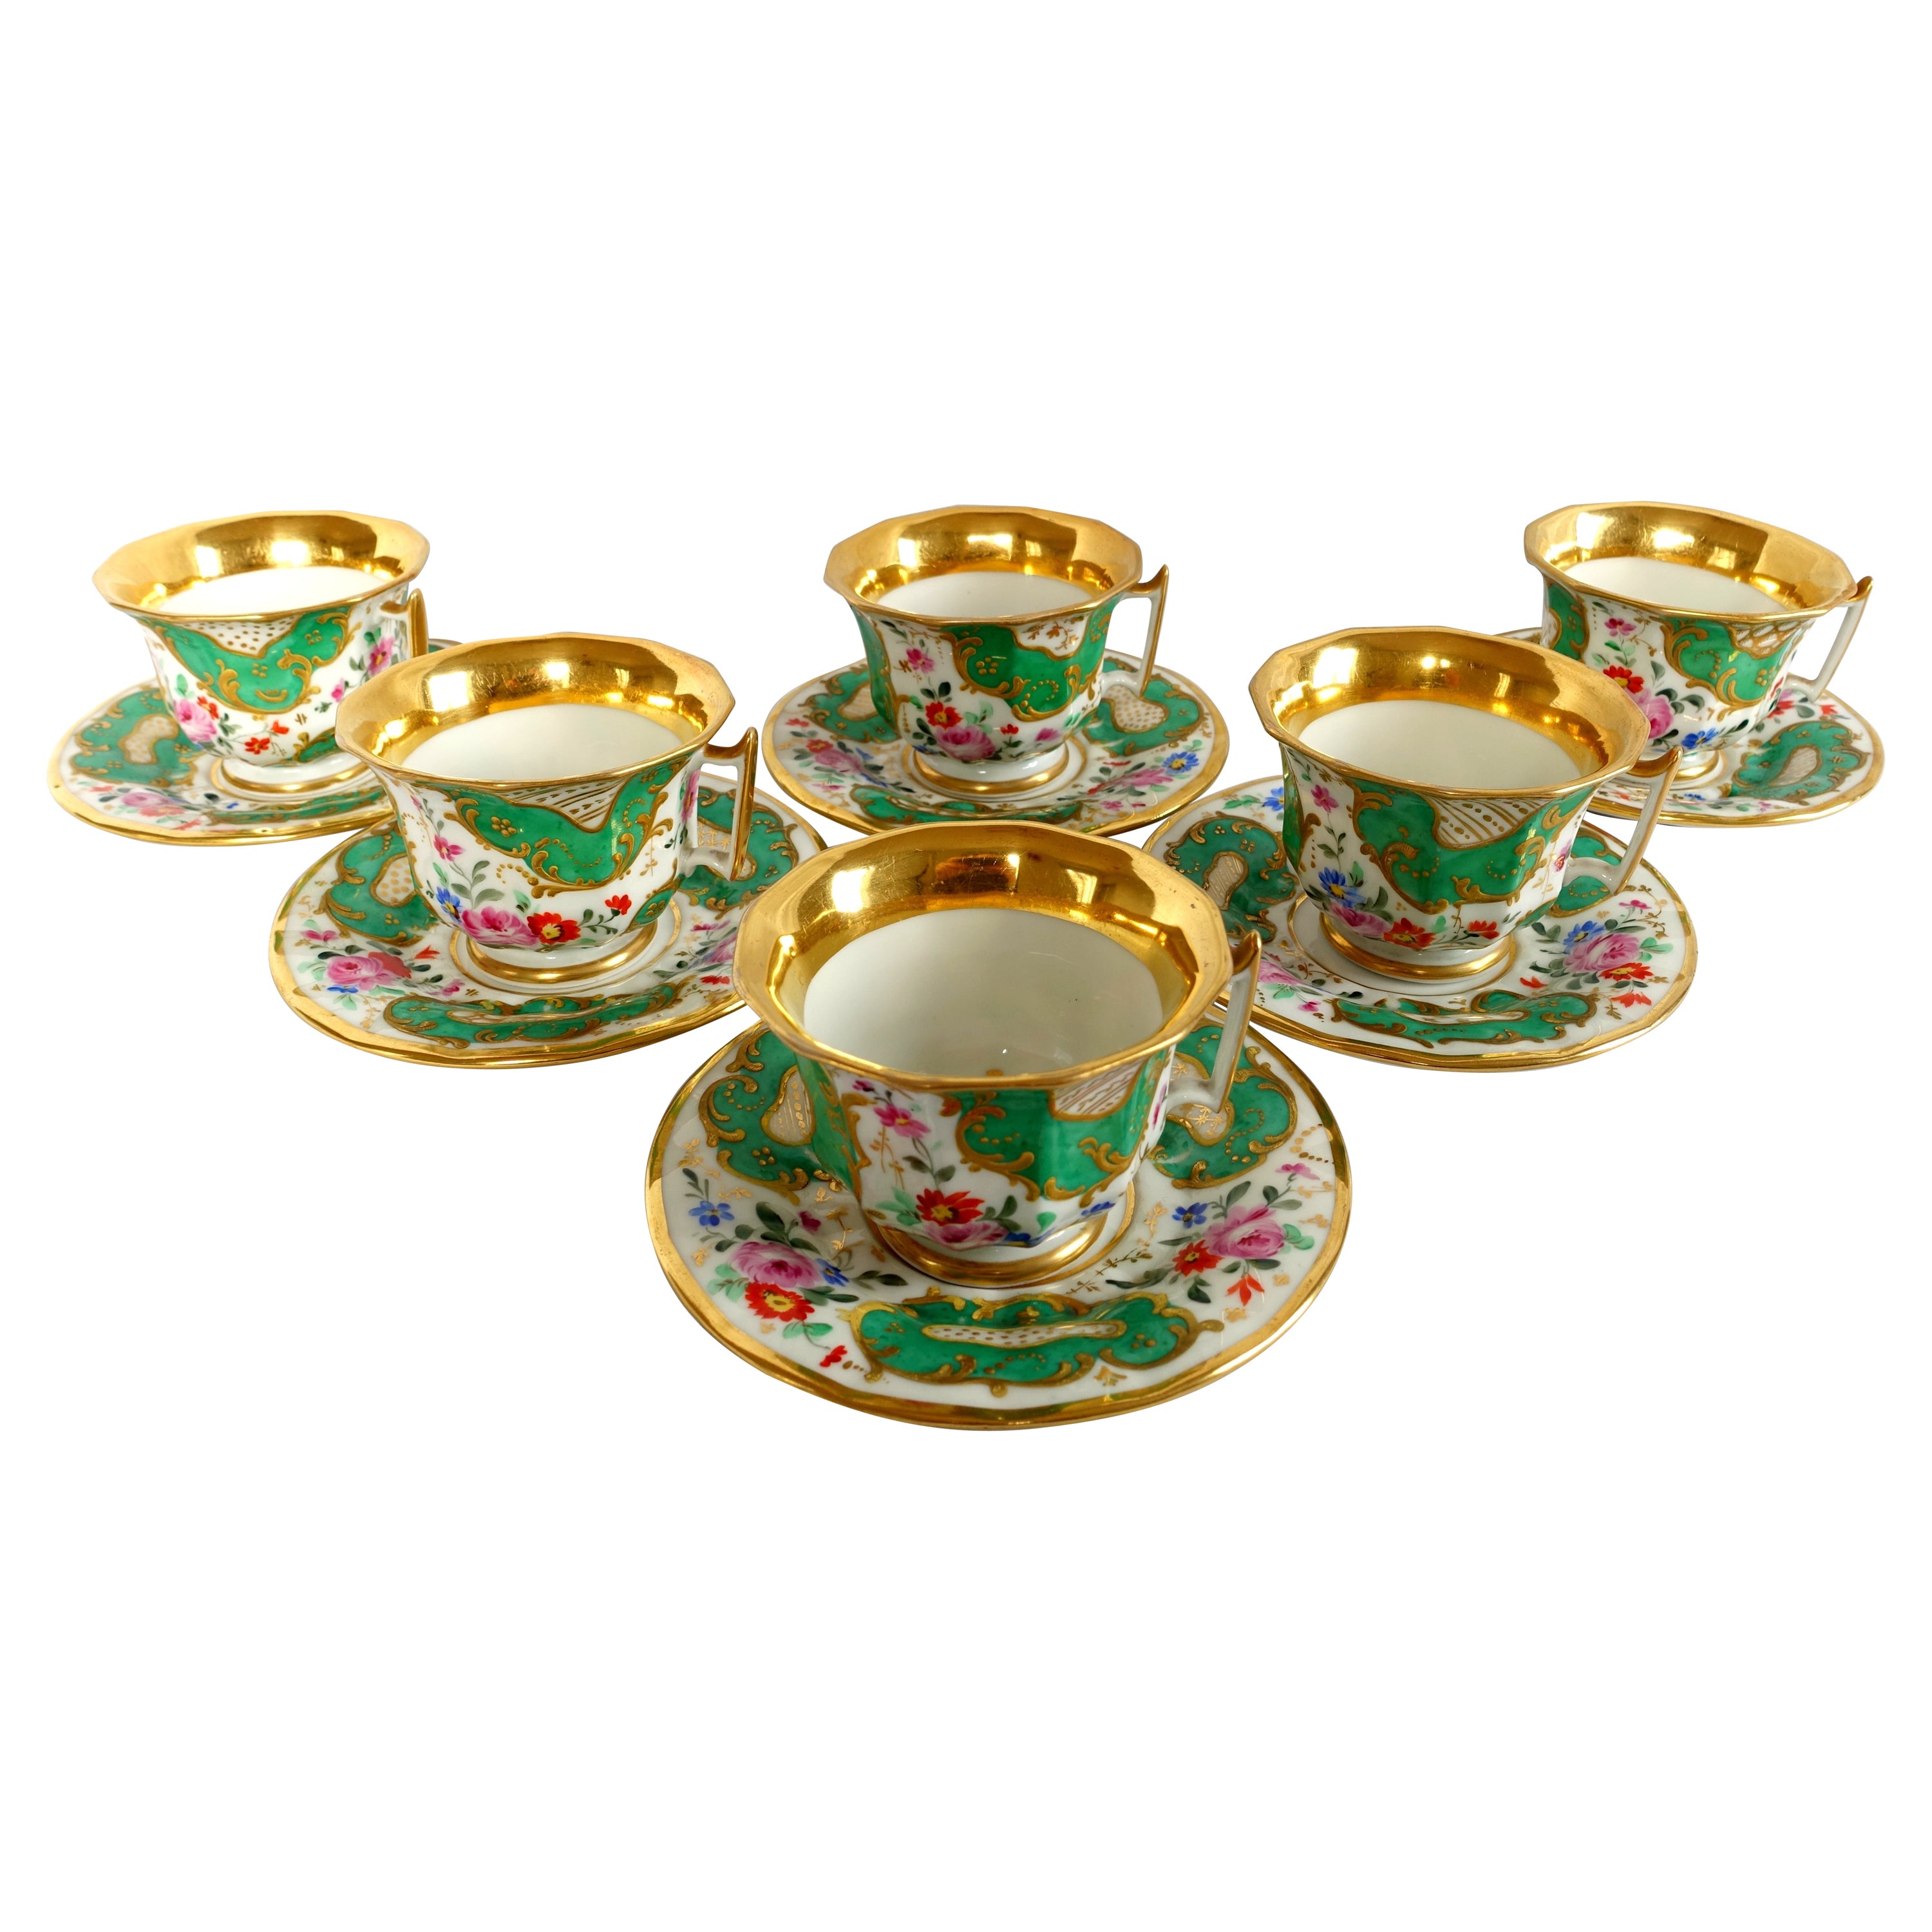 Antique French Paris porcelain coffee set for 6 - cups & saucers - 19th century